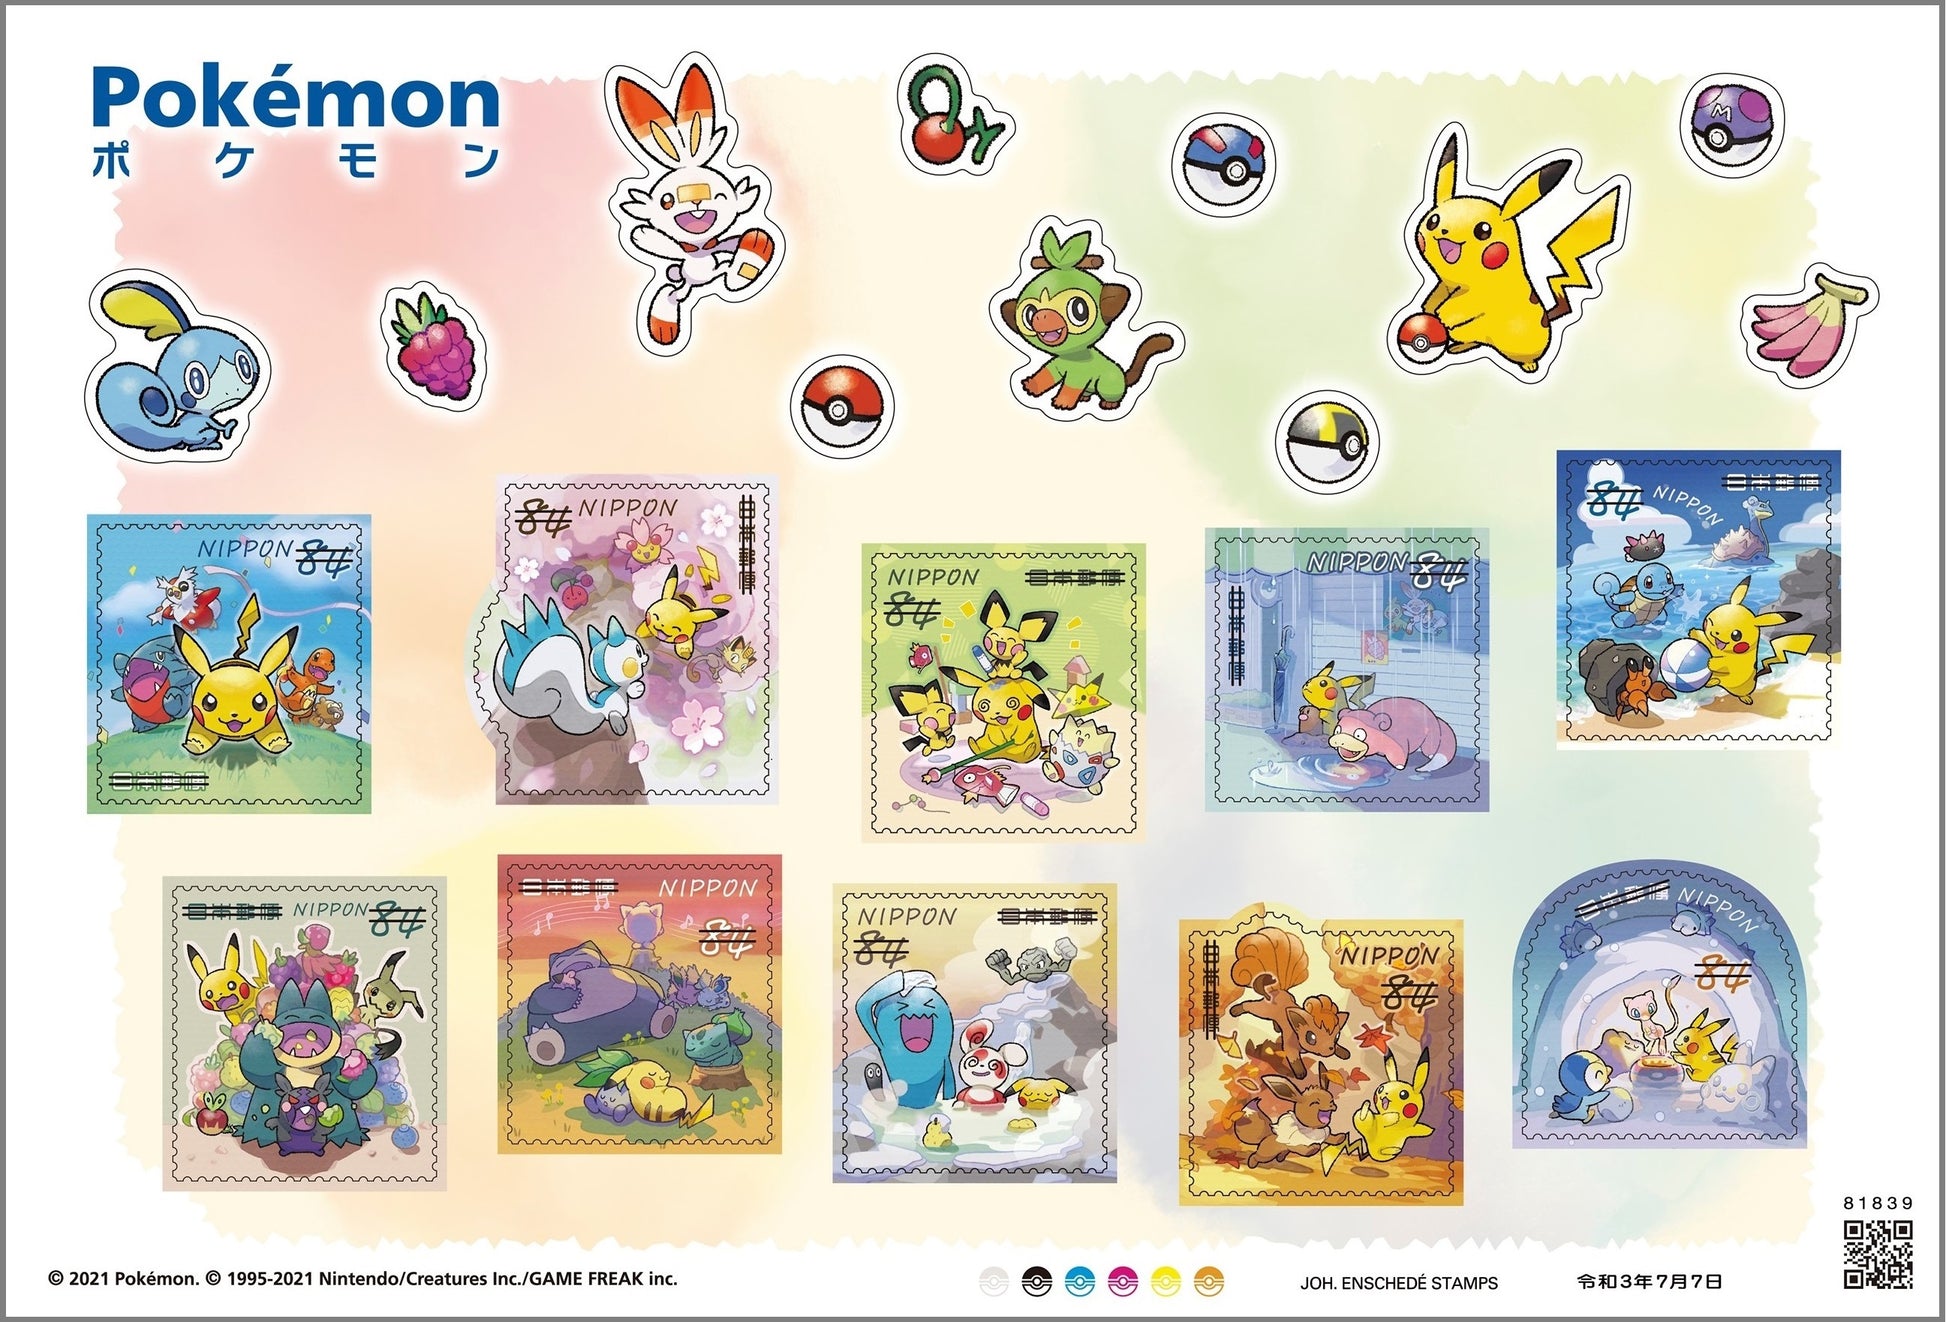 Pokémon - Pokémon x Japan Post Stamps Original Illustrations